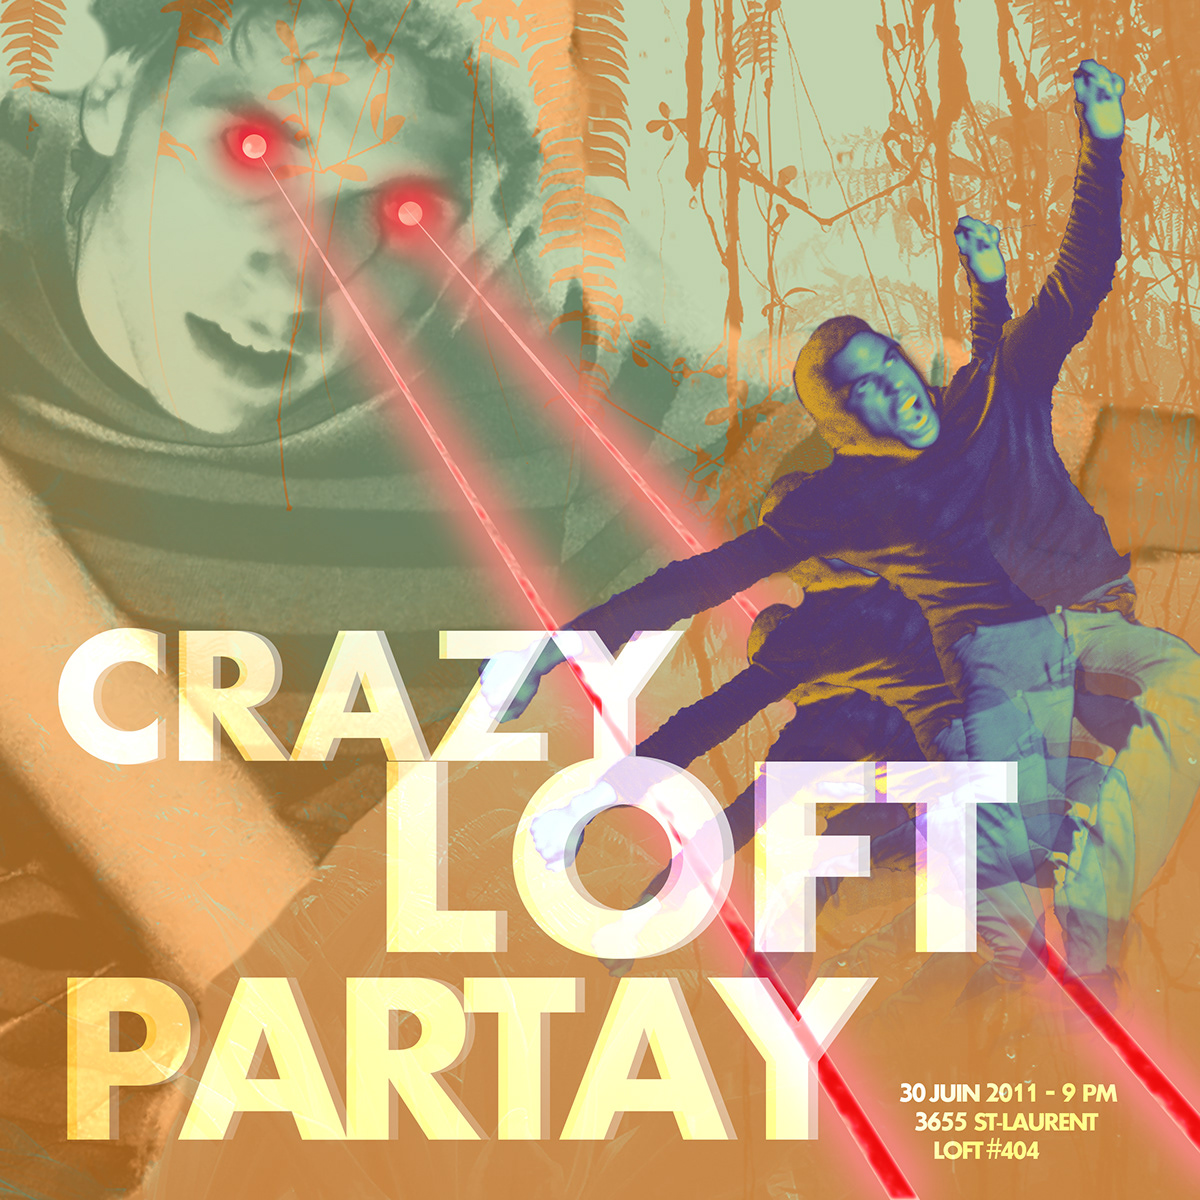 poster lazer laser crazy cray LOFT party partay print jungle purple orange green